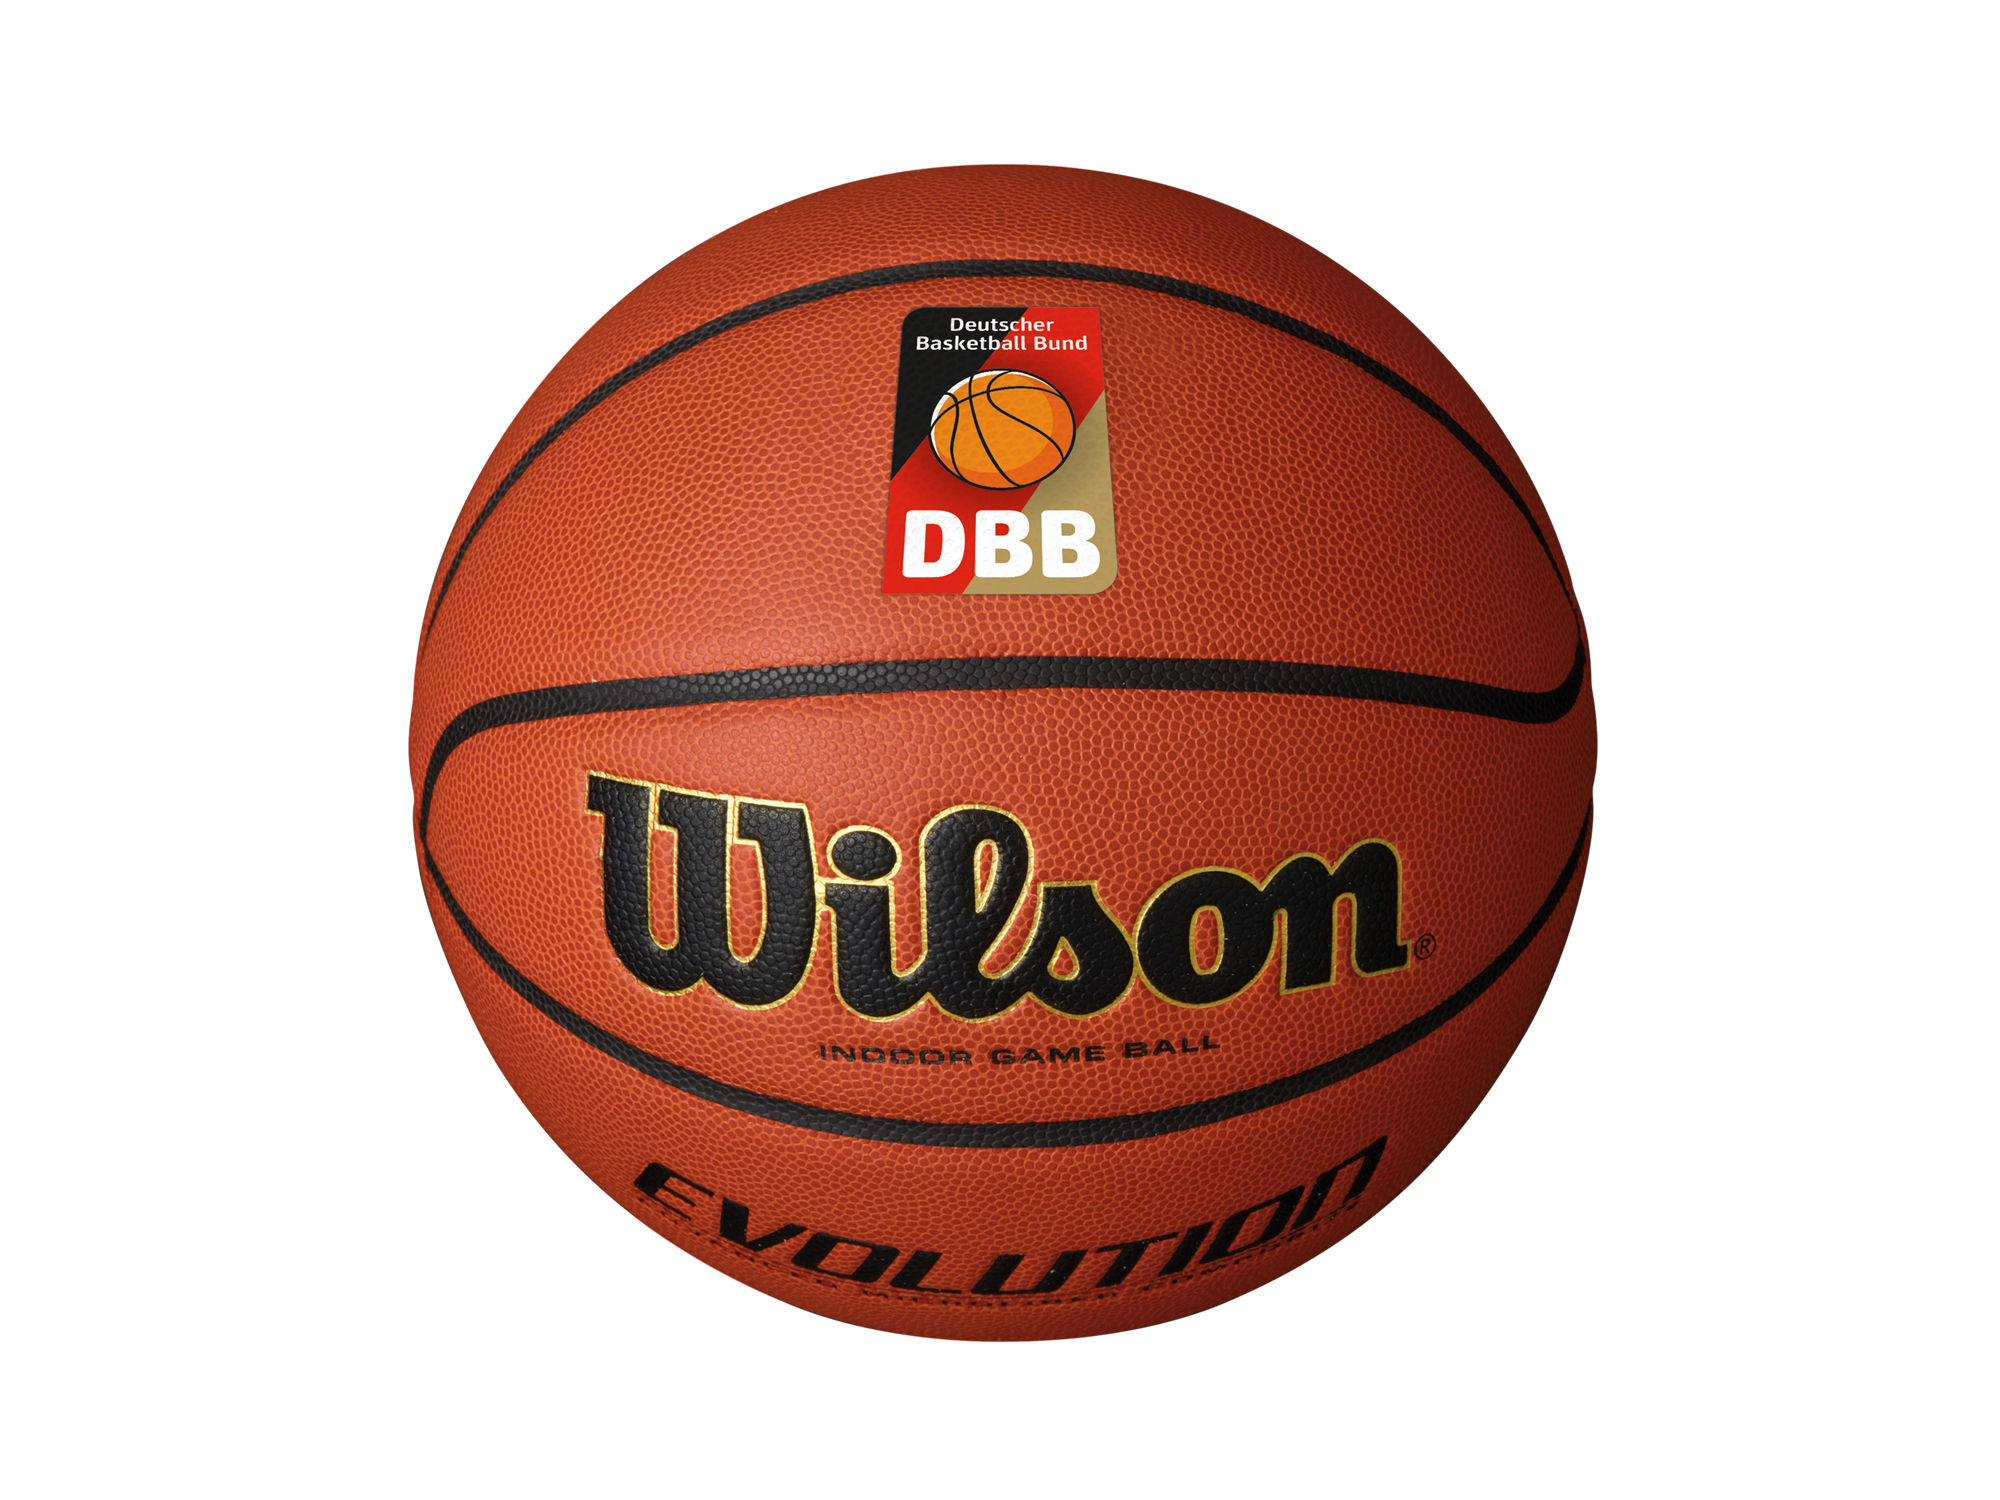 Wilson Evolution DBB Game Basketball